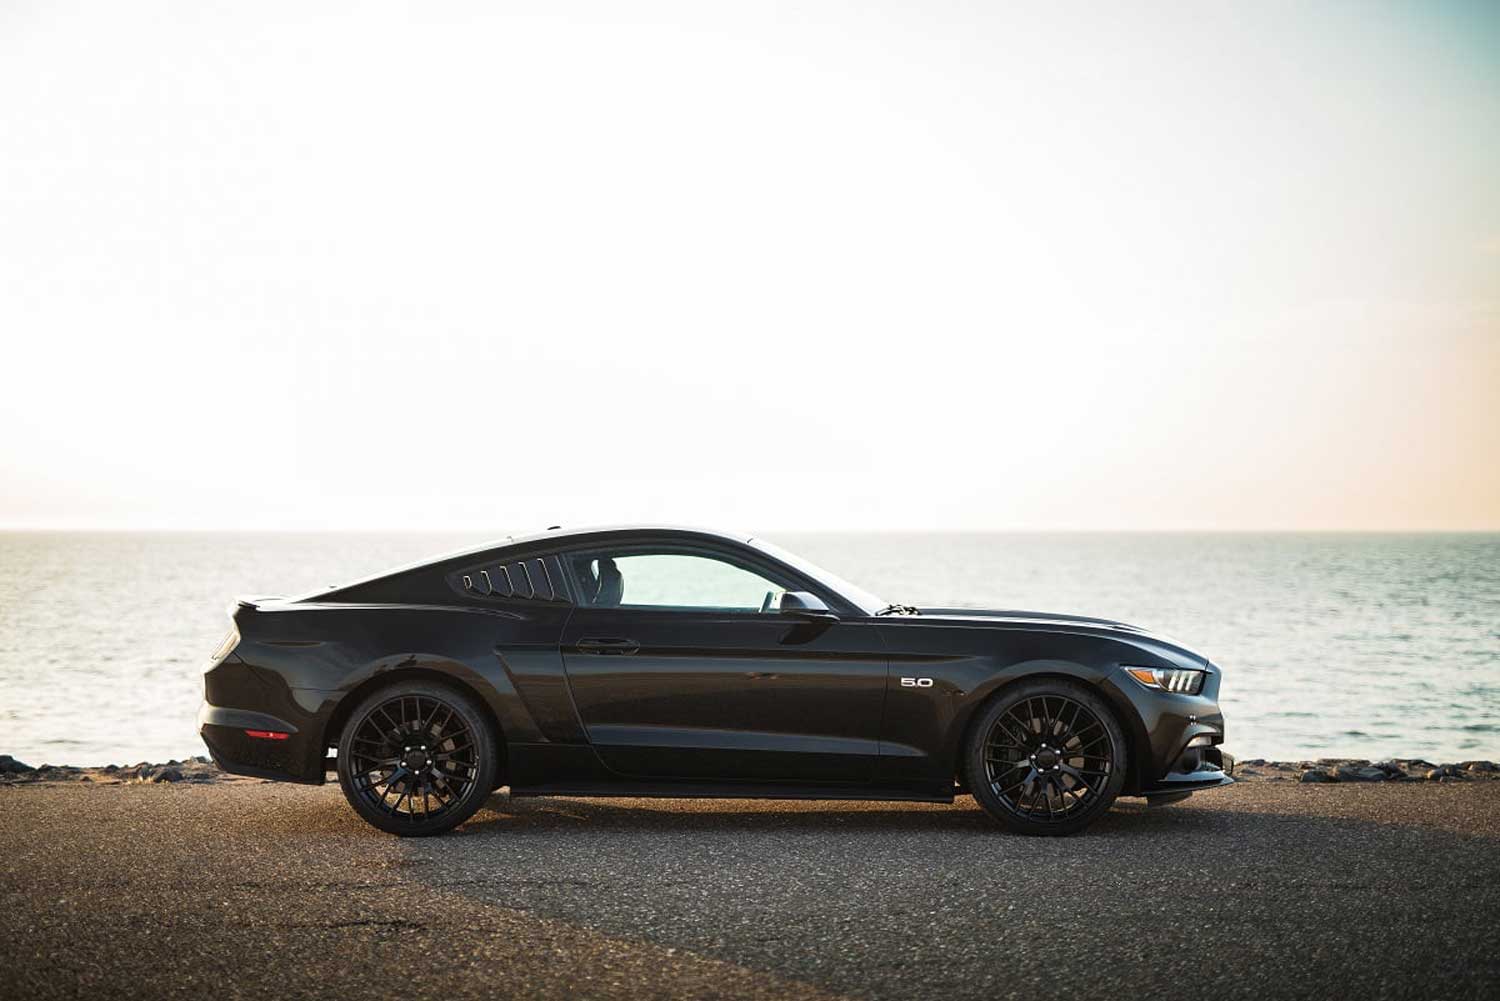 achtergrond betaling Necklet Ford Mustang GT 5.0 V8 Fastback huren? Gratis offerte | Trouwauto  hurenJouwTrouwauto.nl